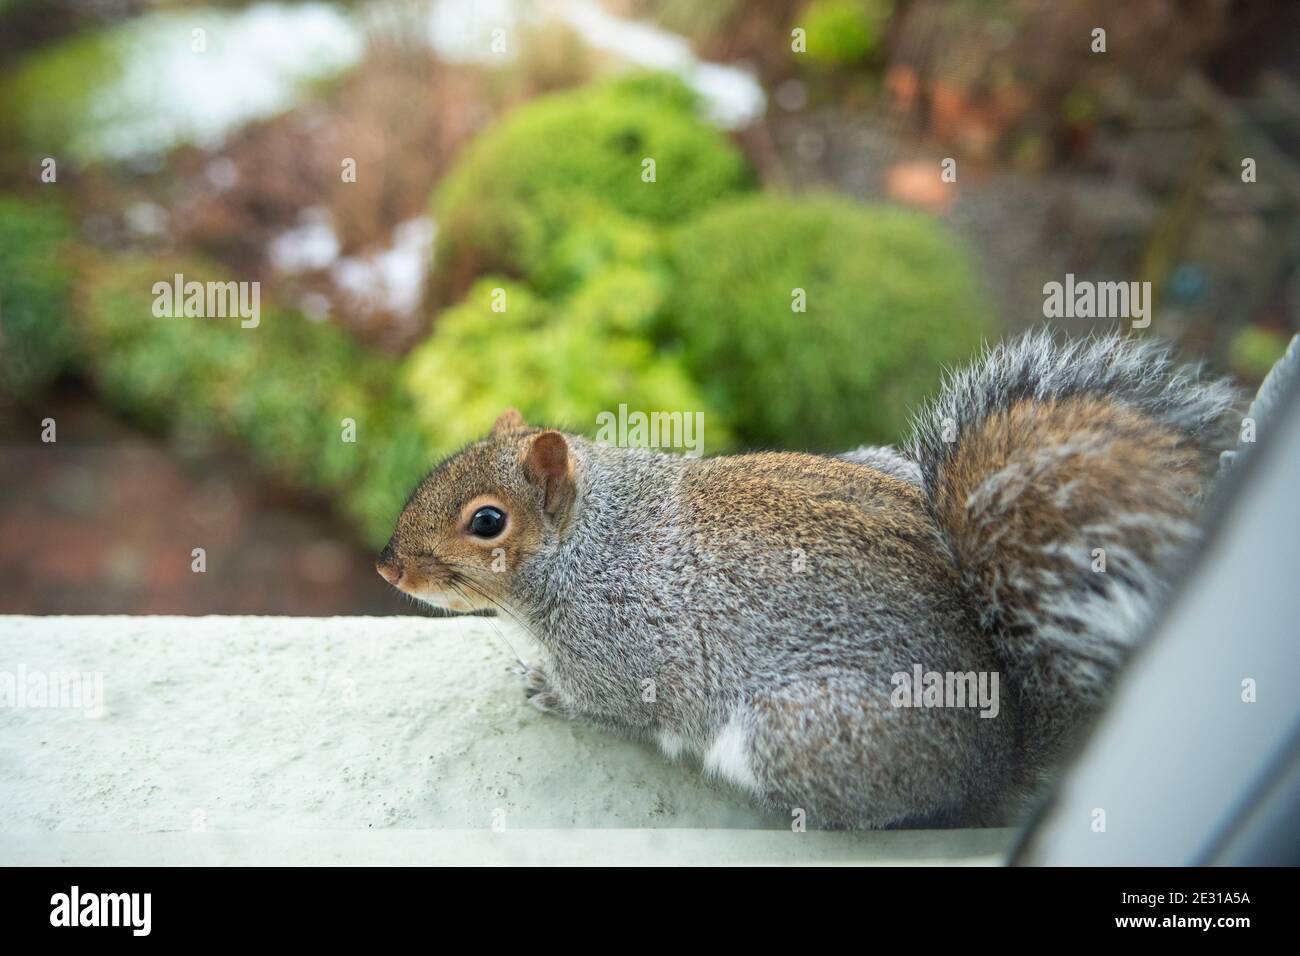 Grey Squirrel (Sciurus carolinensis) sitting on upstairs exterior windowsill looking down over garden (photograph taken from inside) - Scotland, UK Stock Photo